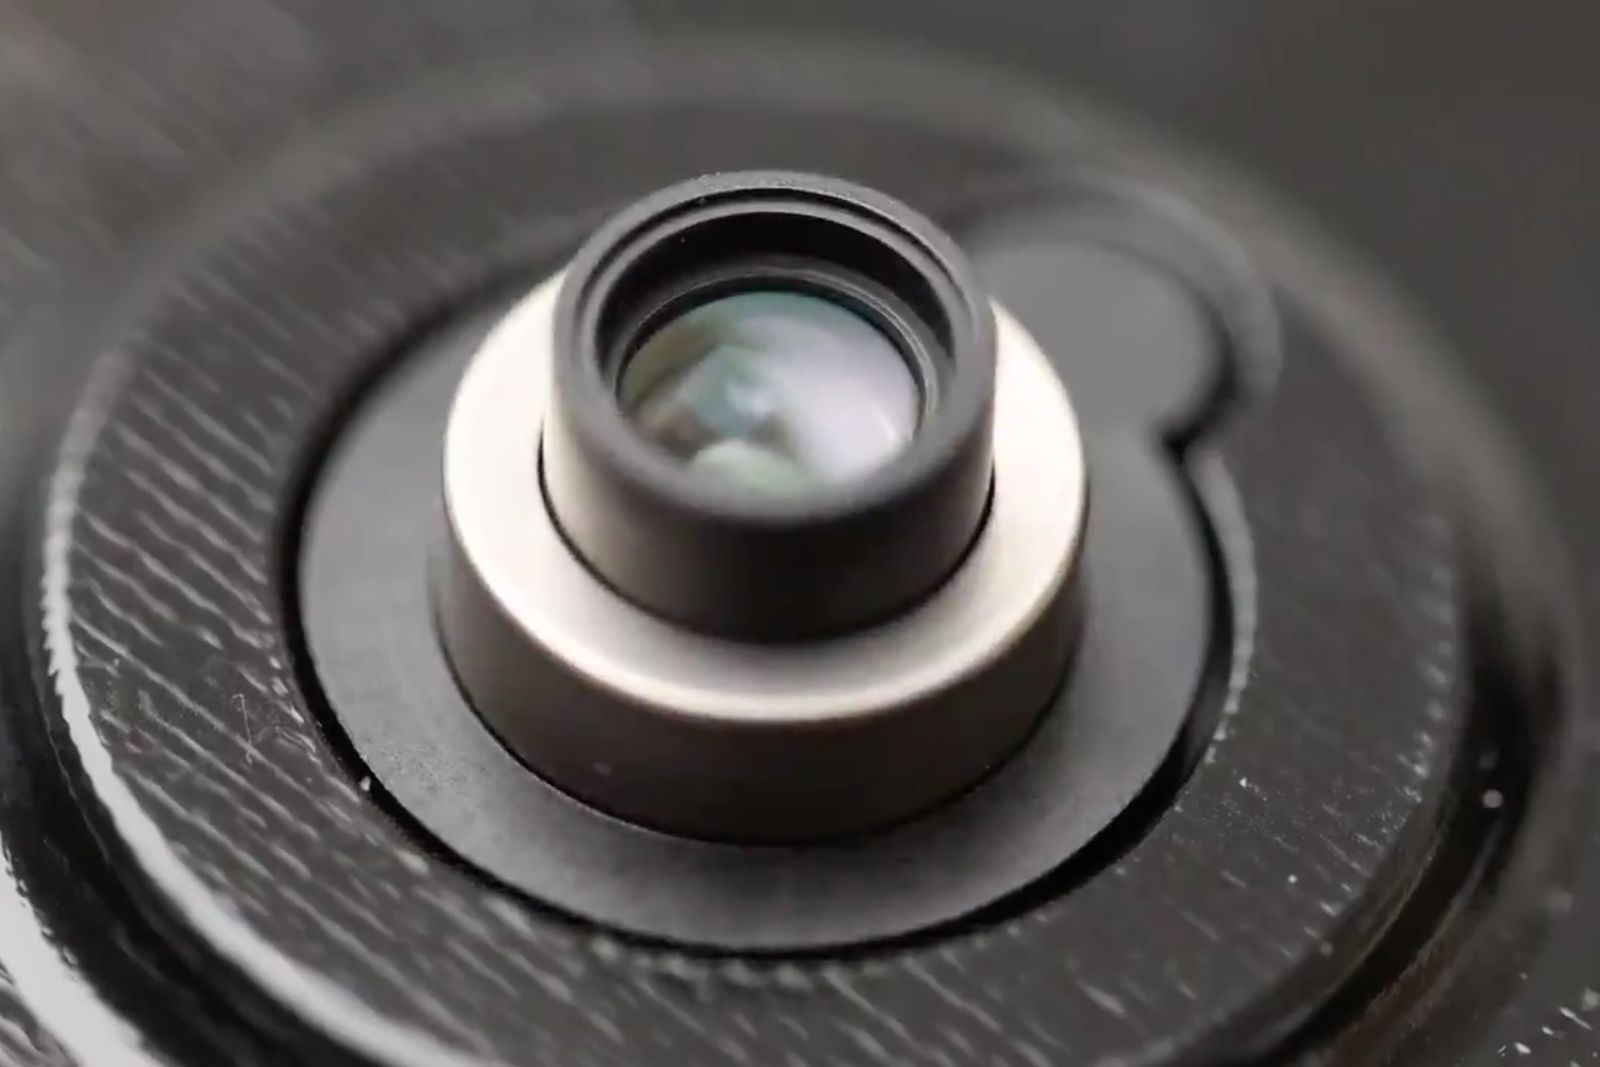 Xiaomi shows off new 120mm retractable smartphone lens photo 1